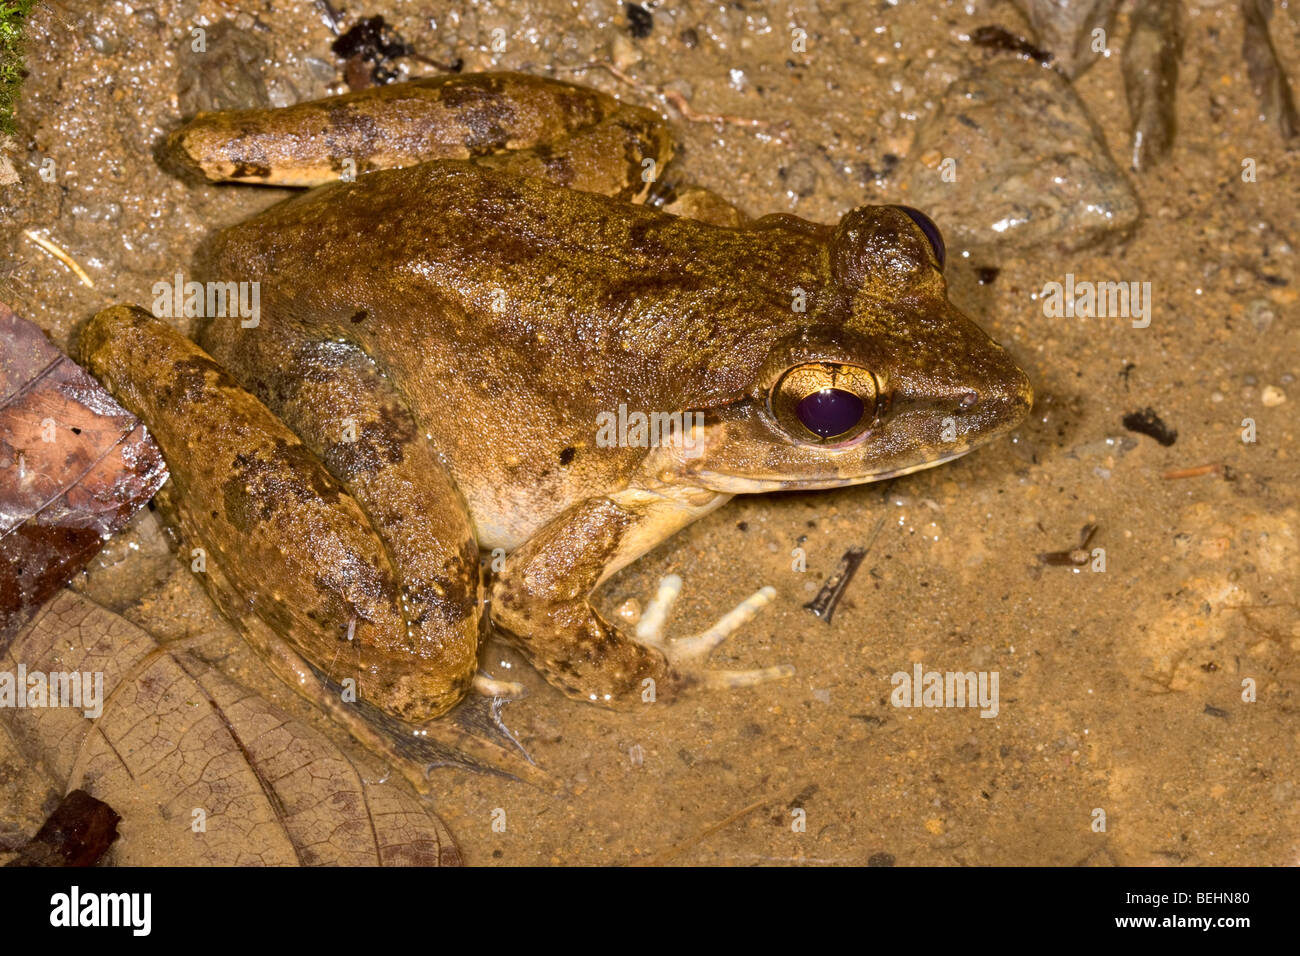 Giant River Frog, Danum Valley, Borneo Stock Photo